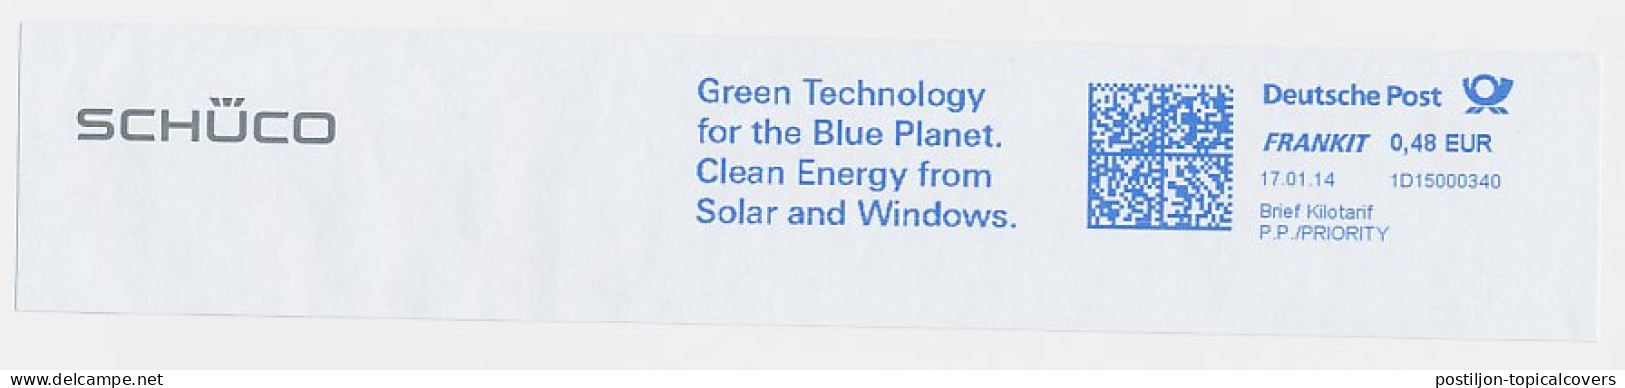 Meter Top Cut Germany 2014 Schuco - Green Technology - Blue Planet - Protection De L'environnement & Climat